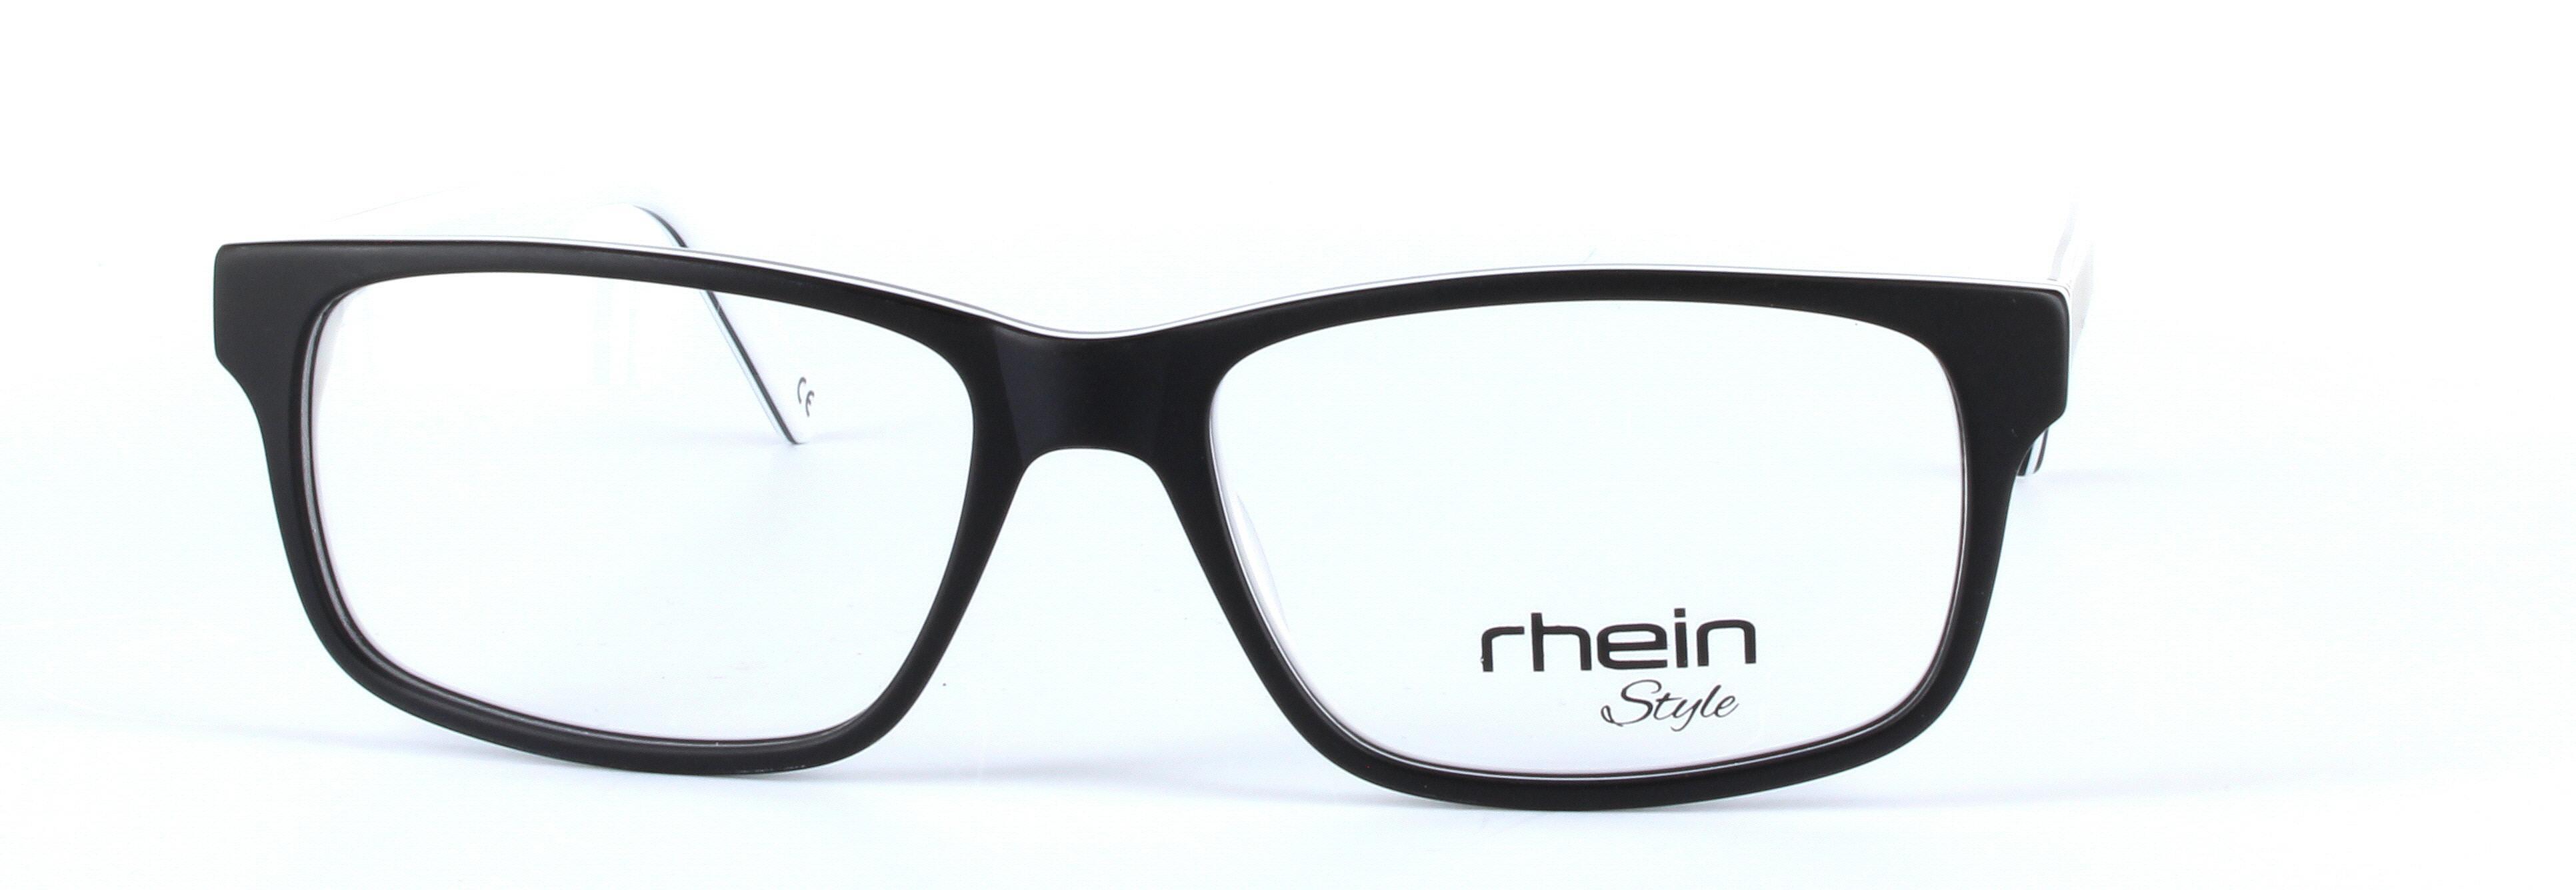 Carson Black and White Full Rim Oval Rectangular Plastic Glasses - Image View 5